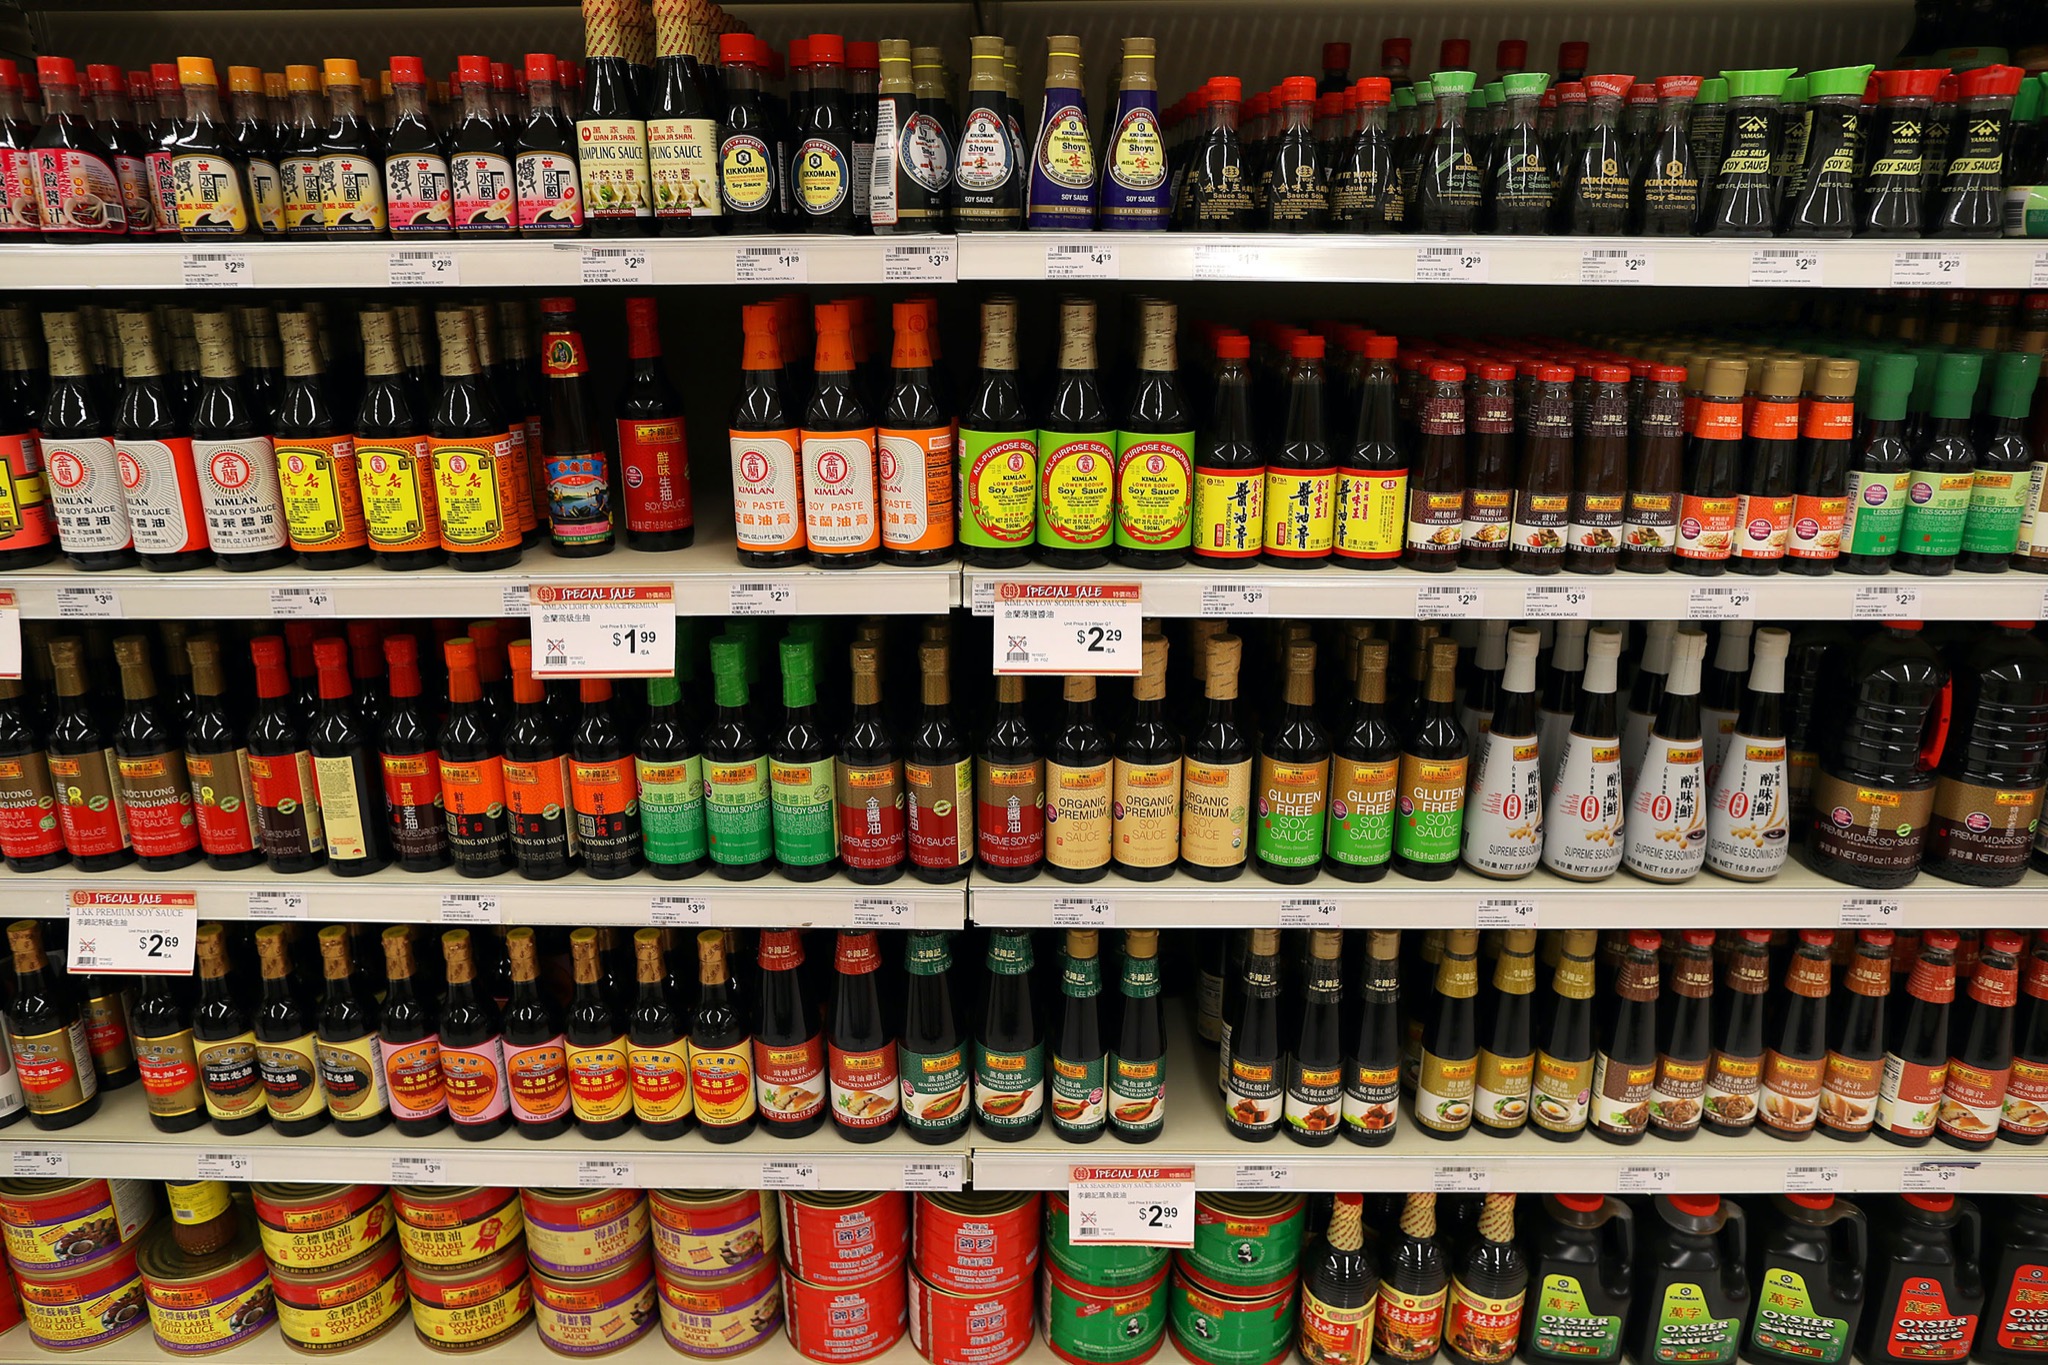 Asian-Focused Supermarket Opens Store at Westfield Oakridge Mall